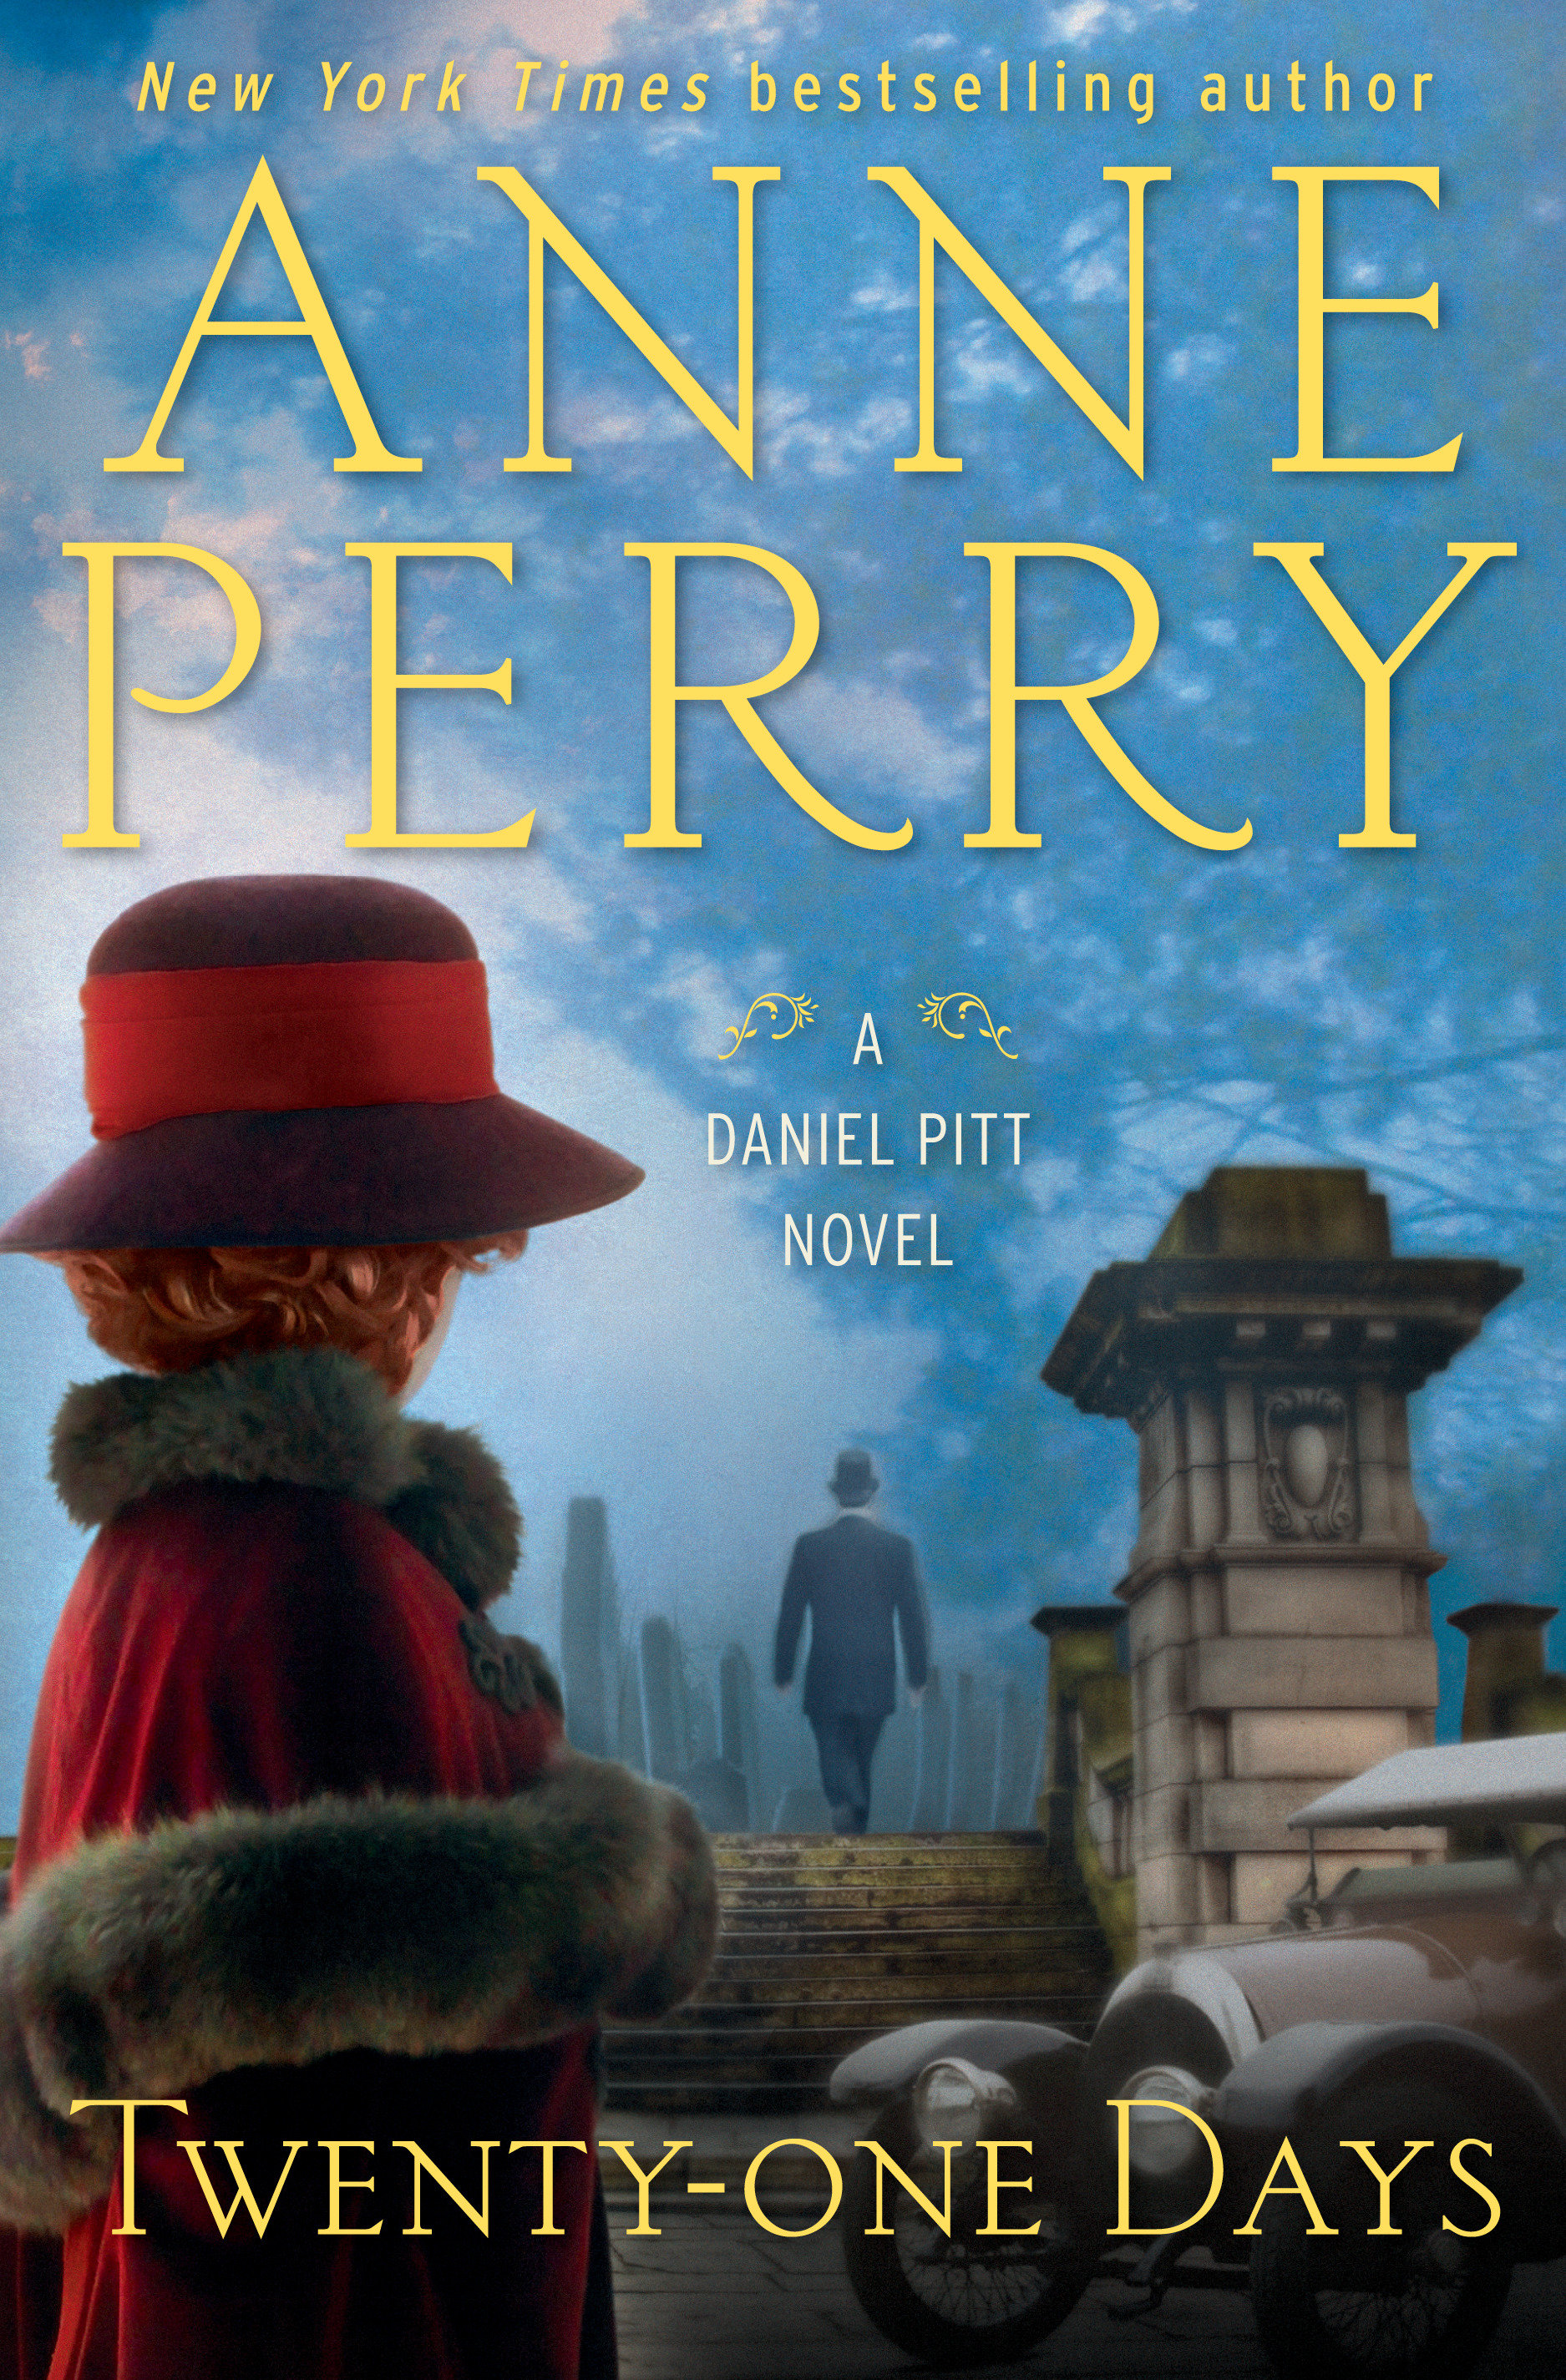 Twenty-one days a Daniel Pitt novel cover image